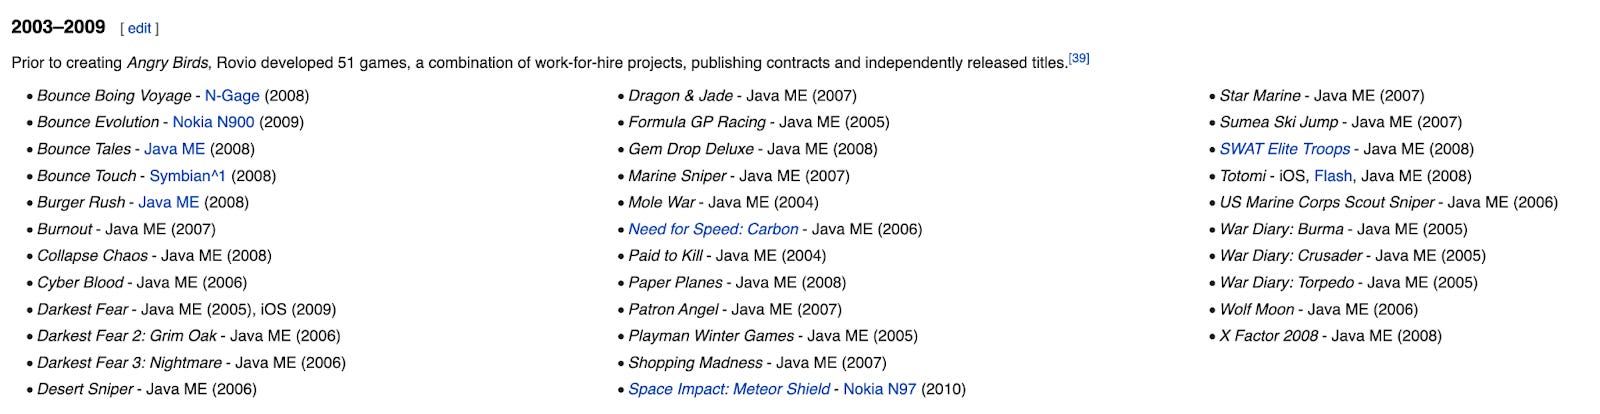 God of War (2005 video game) - Wikipedia